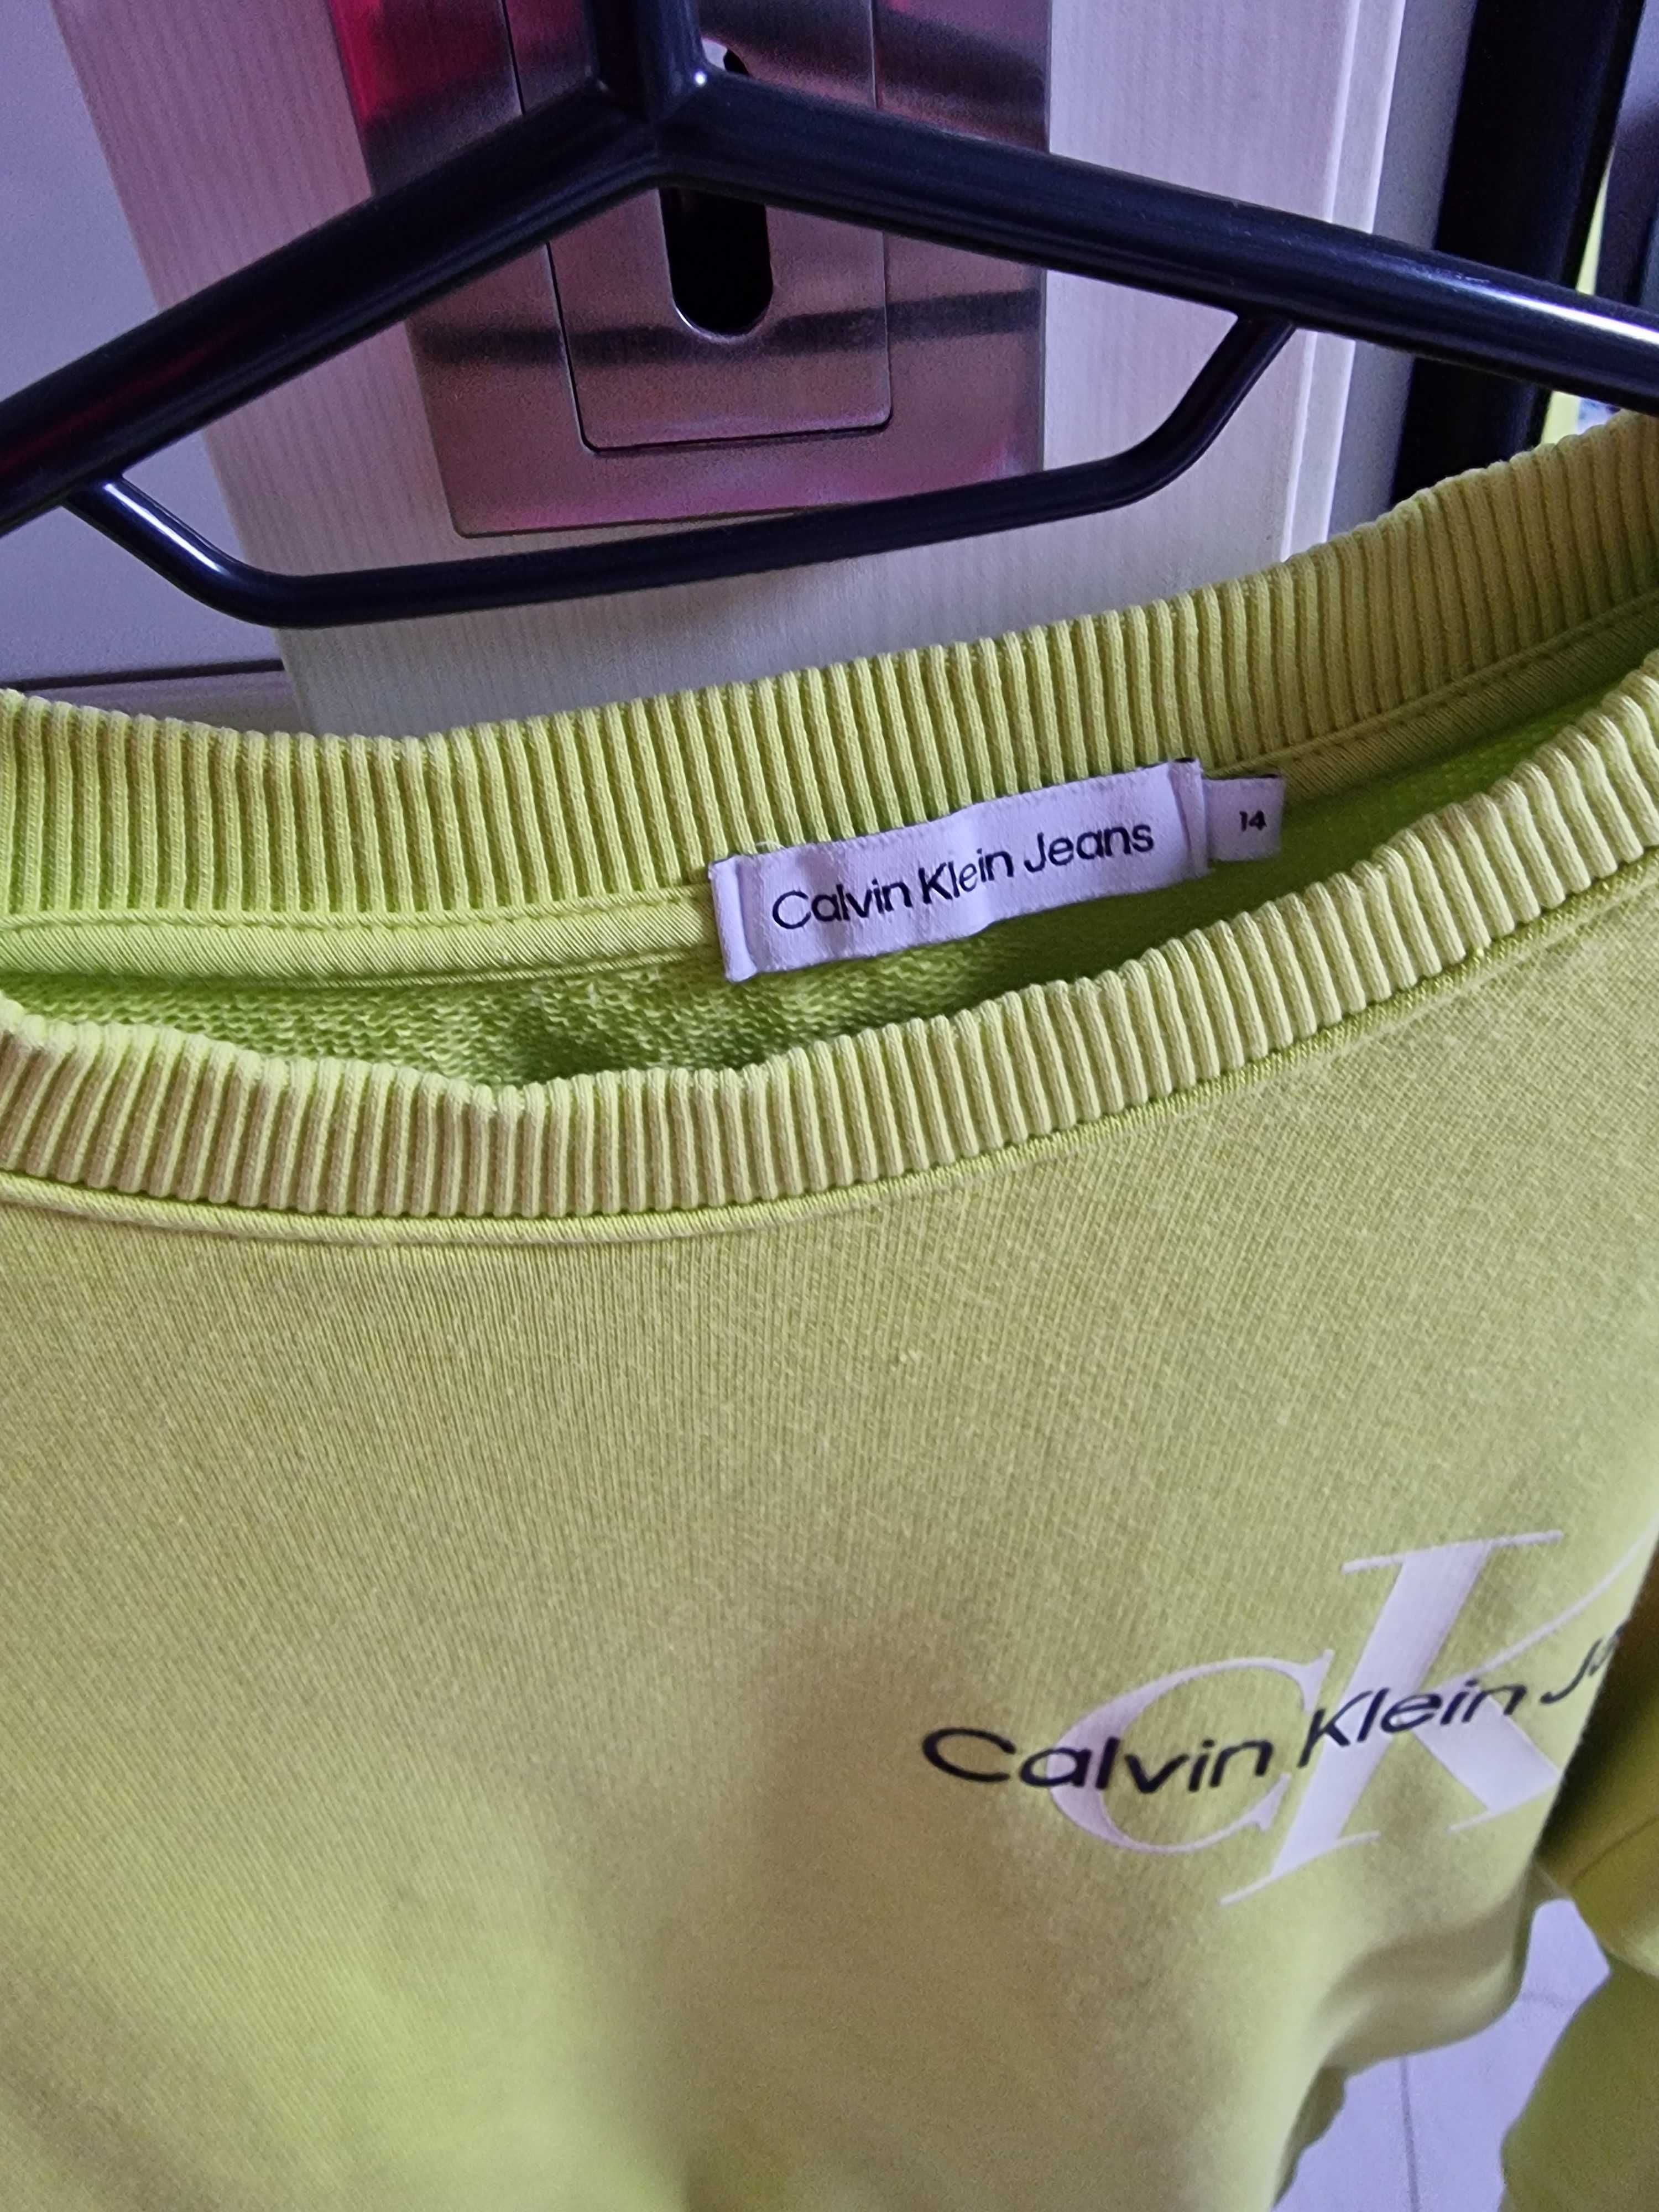 Bluza chlopieca firmy Kalvin Clein